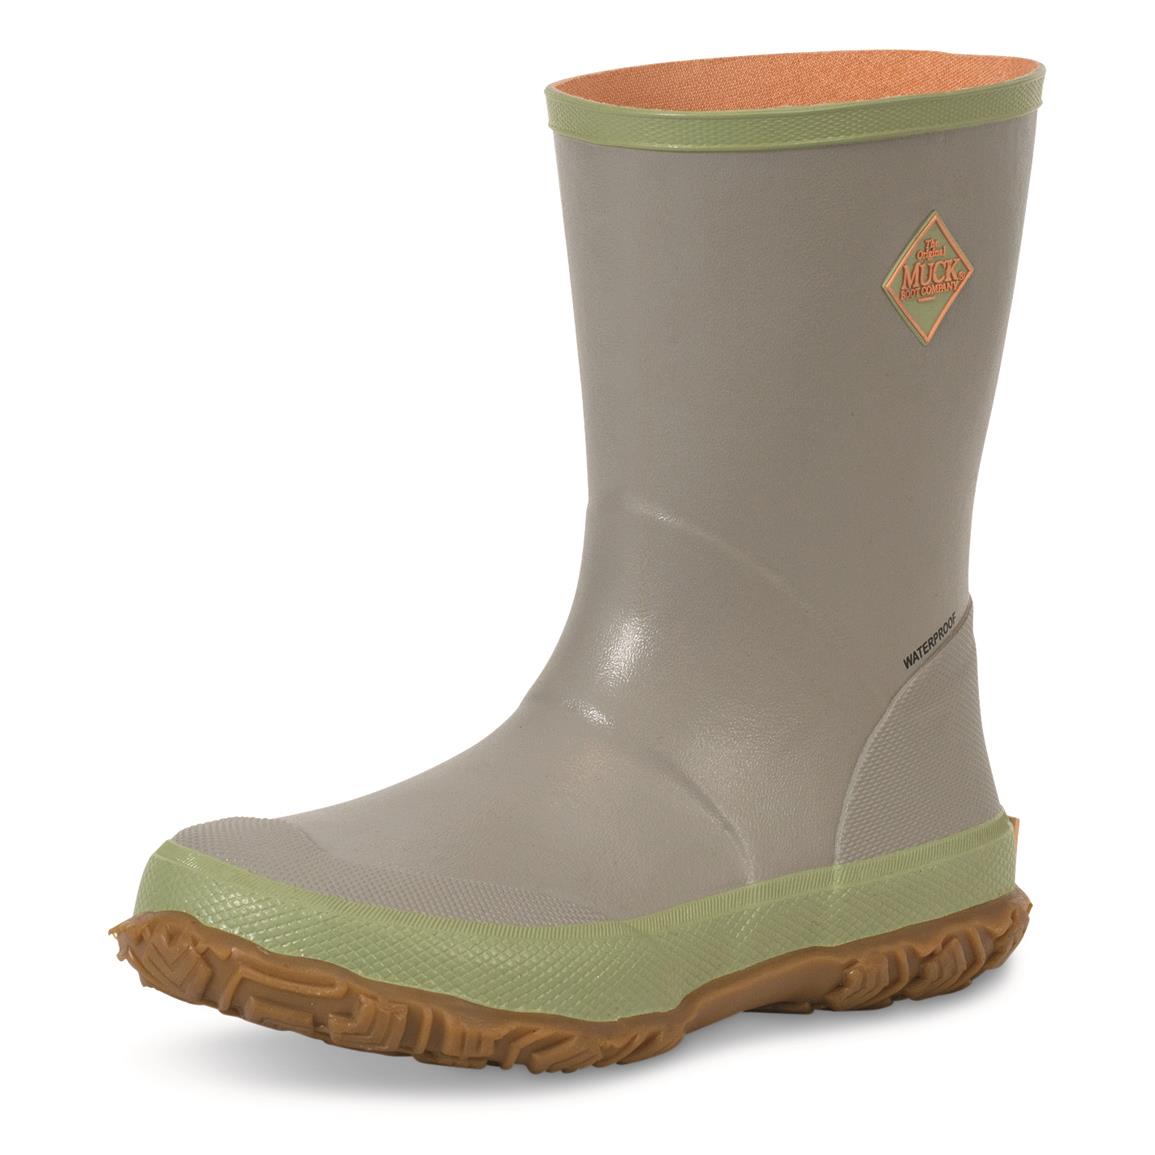 Muck Women's Forager Mid Waterproof Rubber Boots, Light Gray/resida